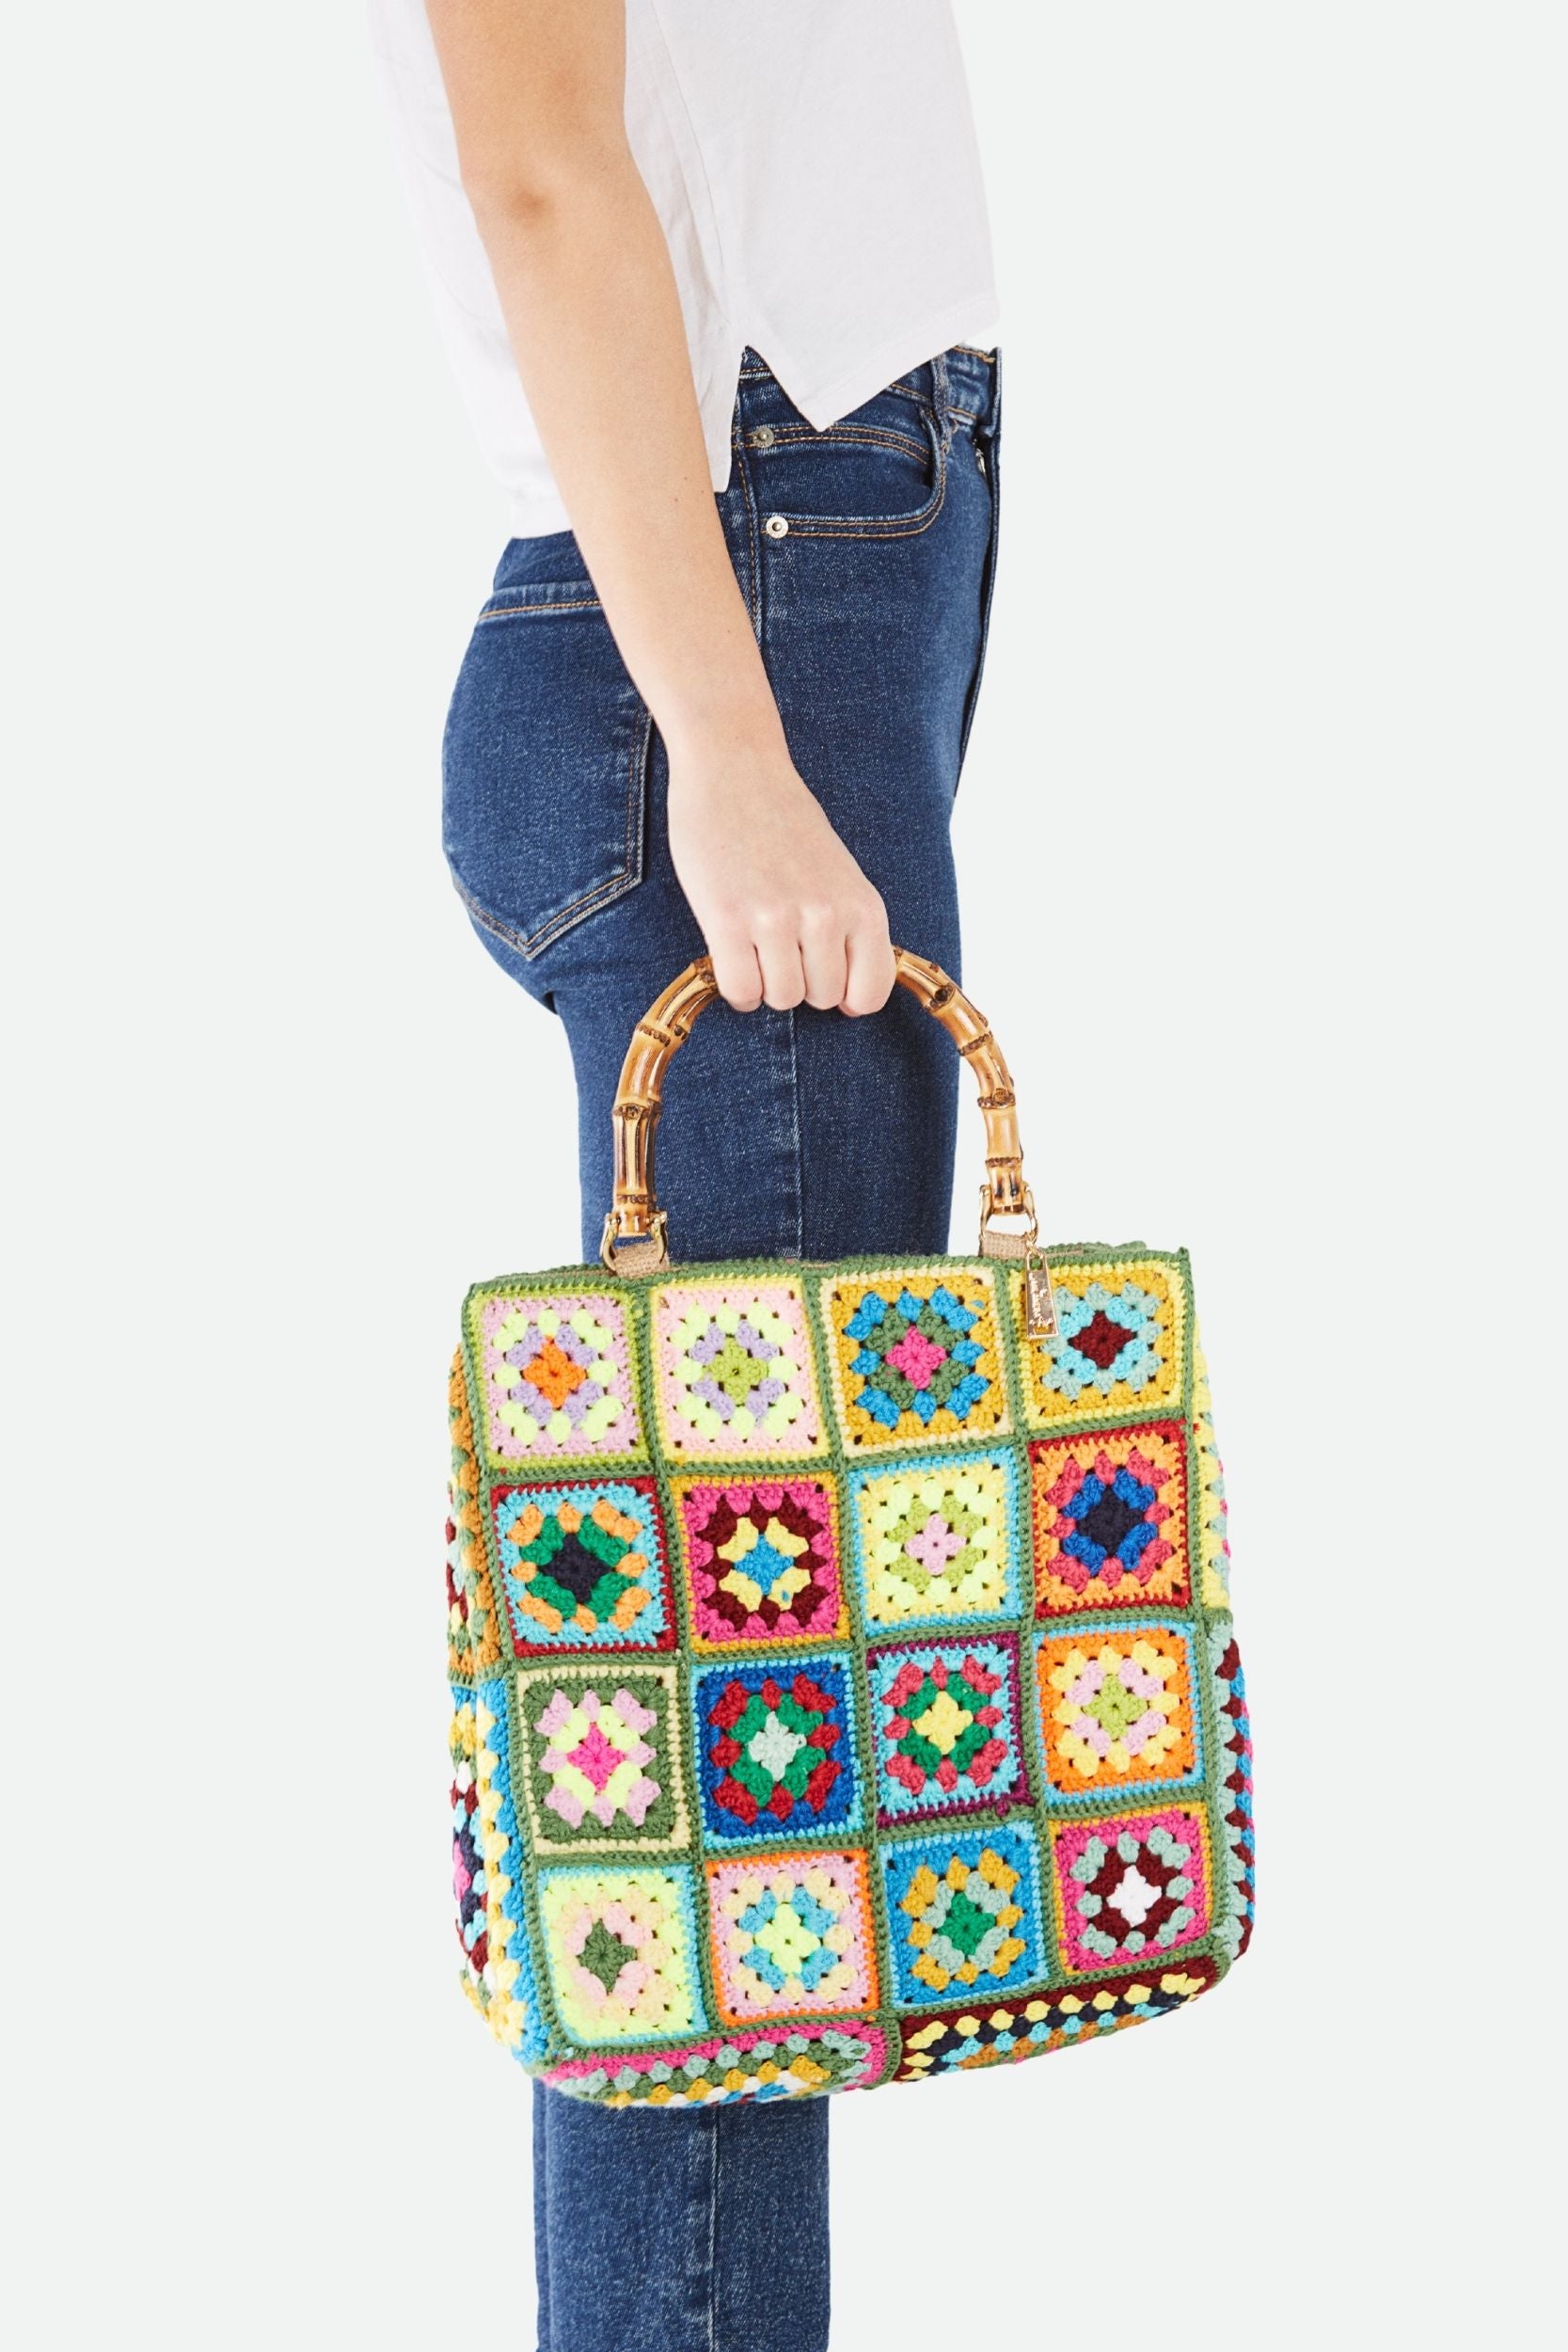 La Milanesa Large Green Crochet Bag